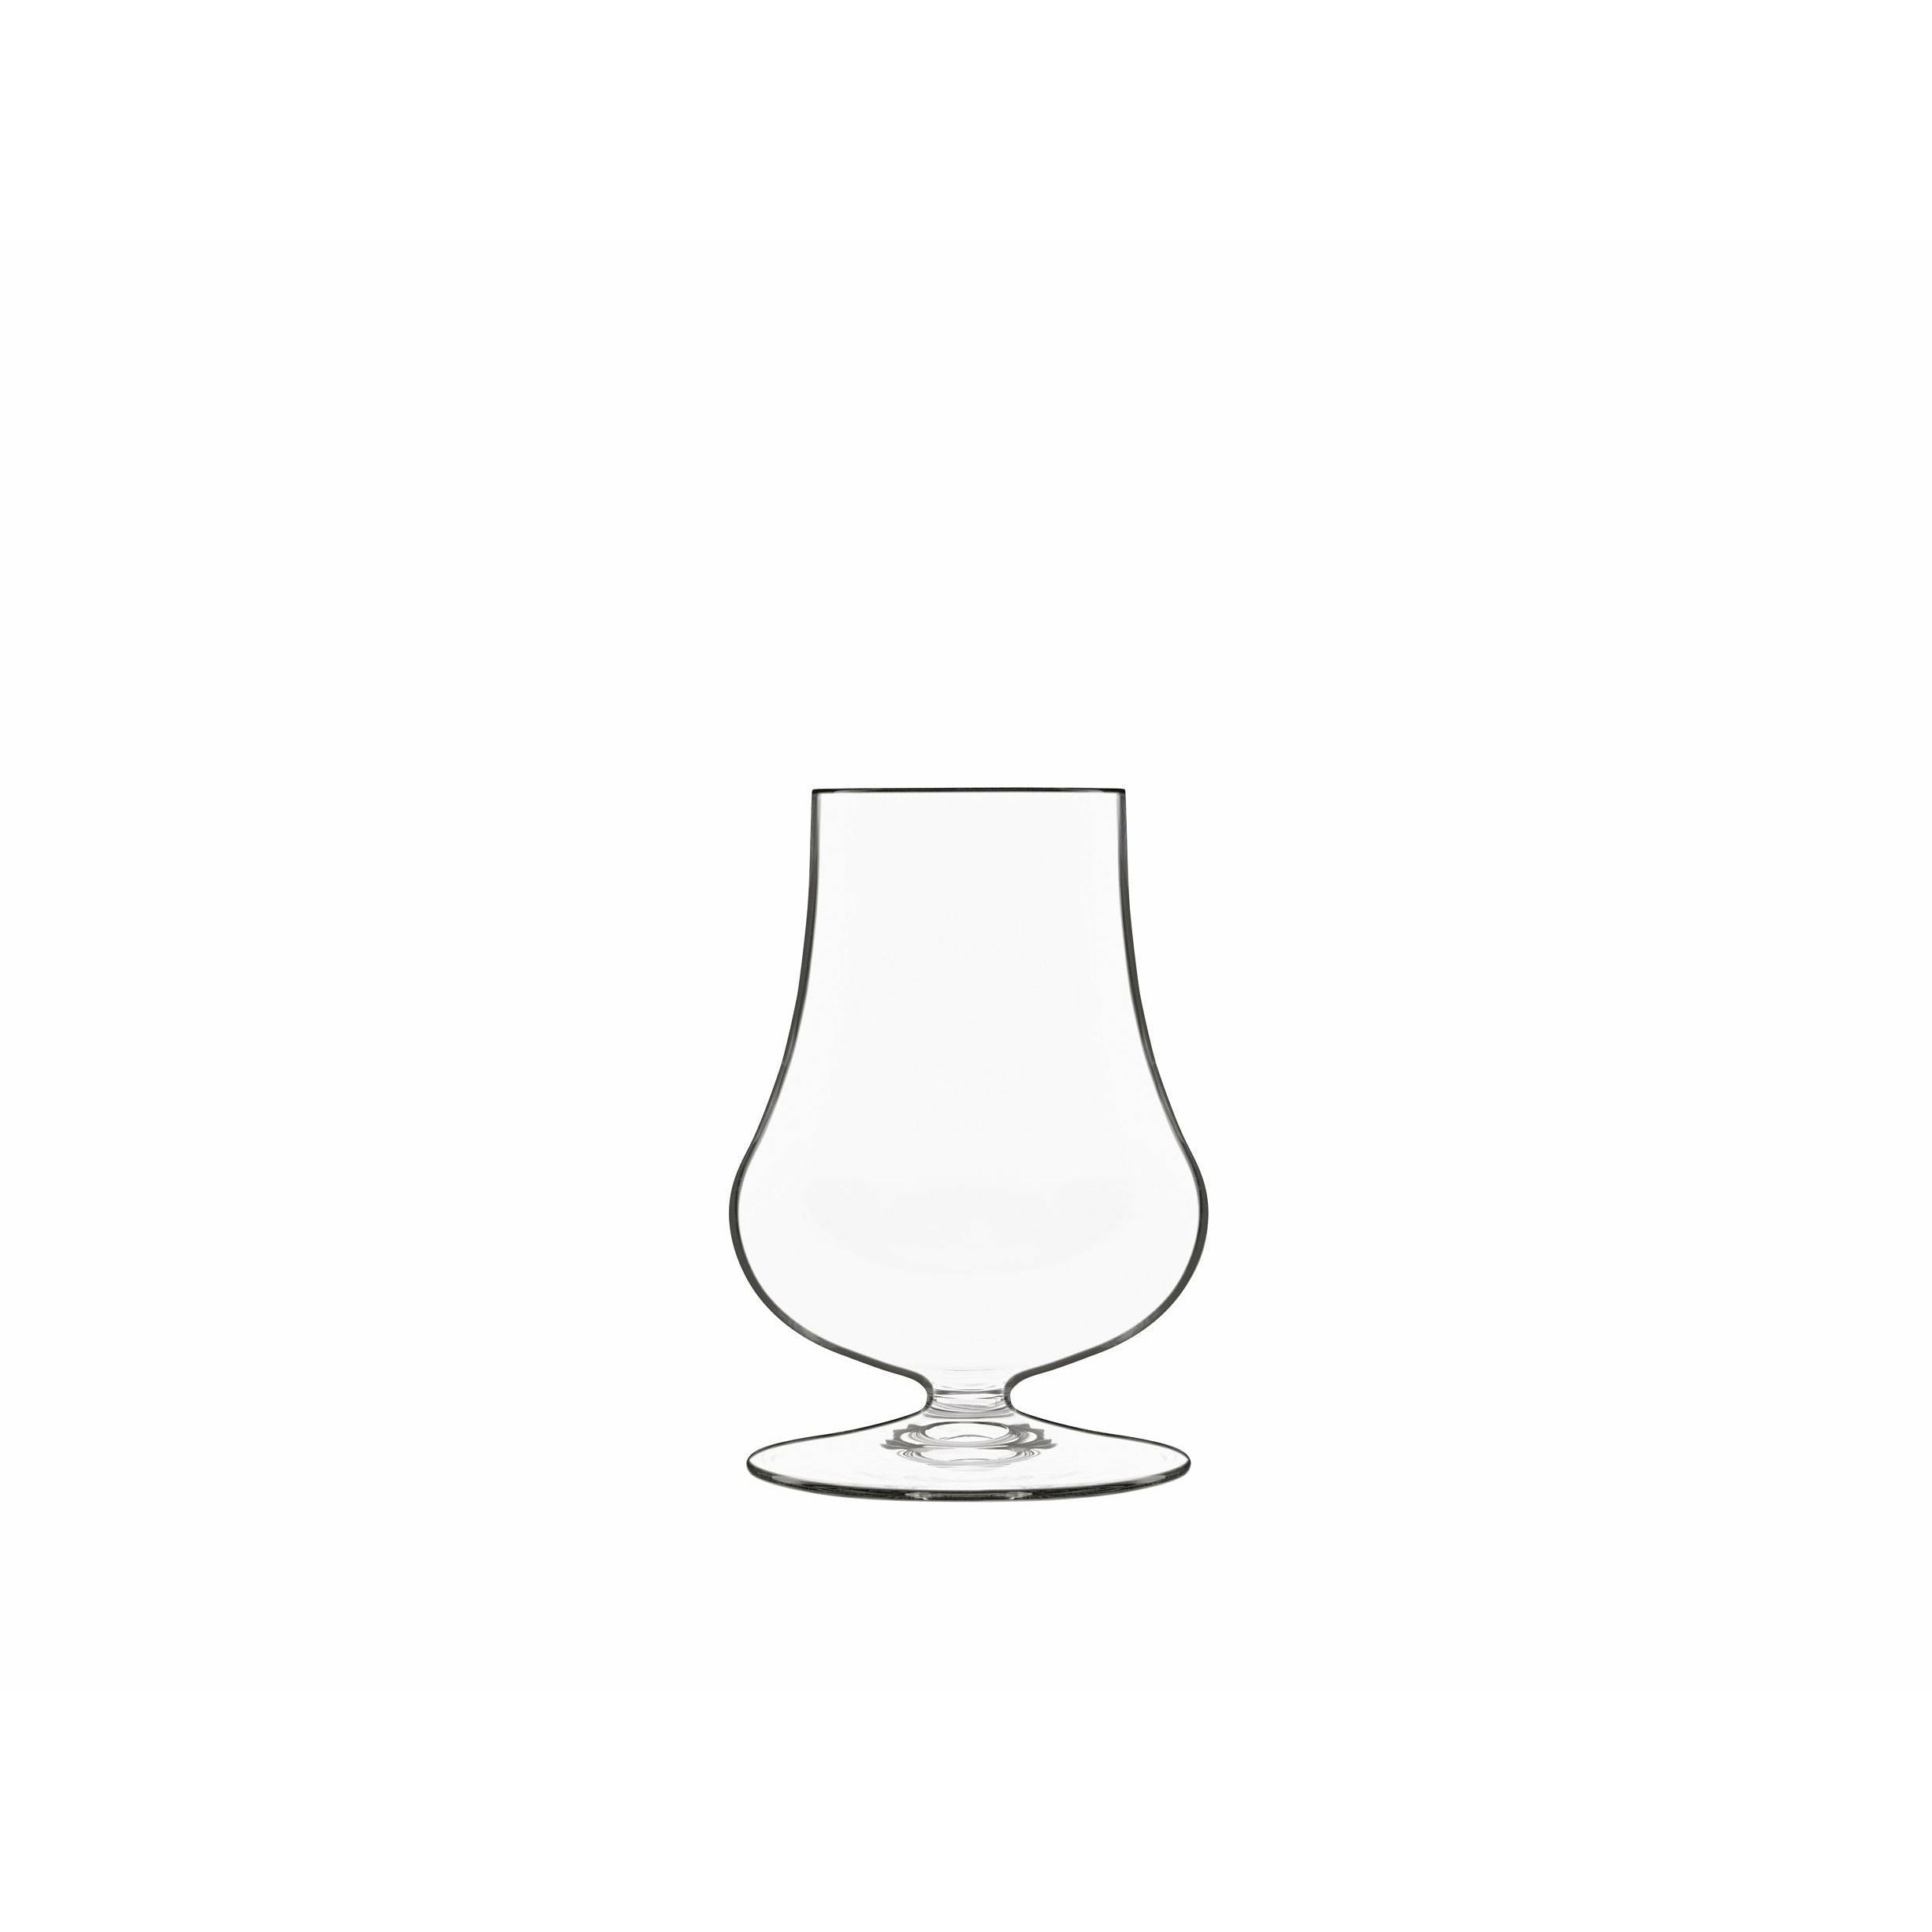 Luigi Bormioli Tentazioni spirits en verre / verre de whisky au goût, ensemble de 6